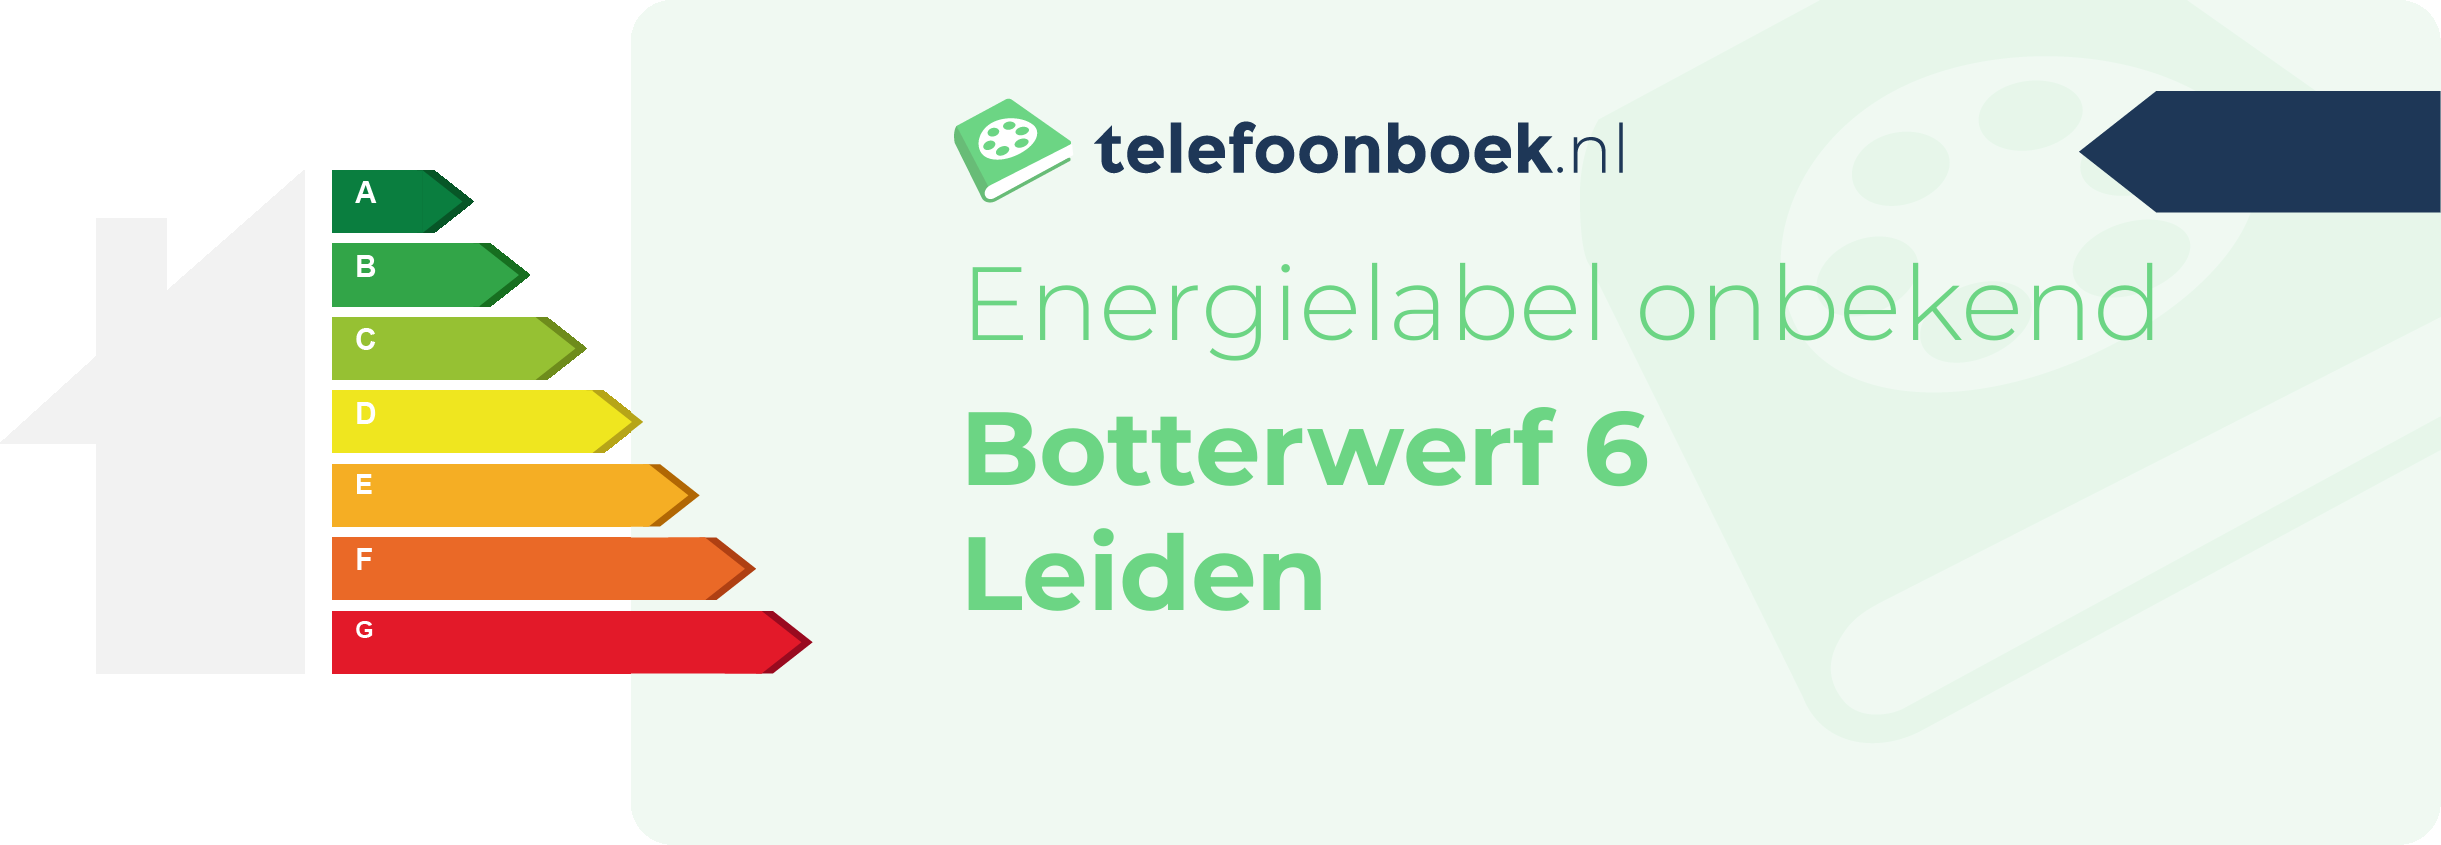 Energielabel Botterwerf 6 Leiden